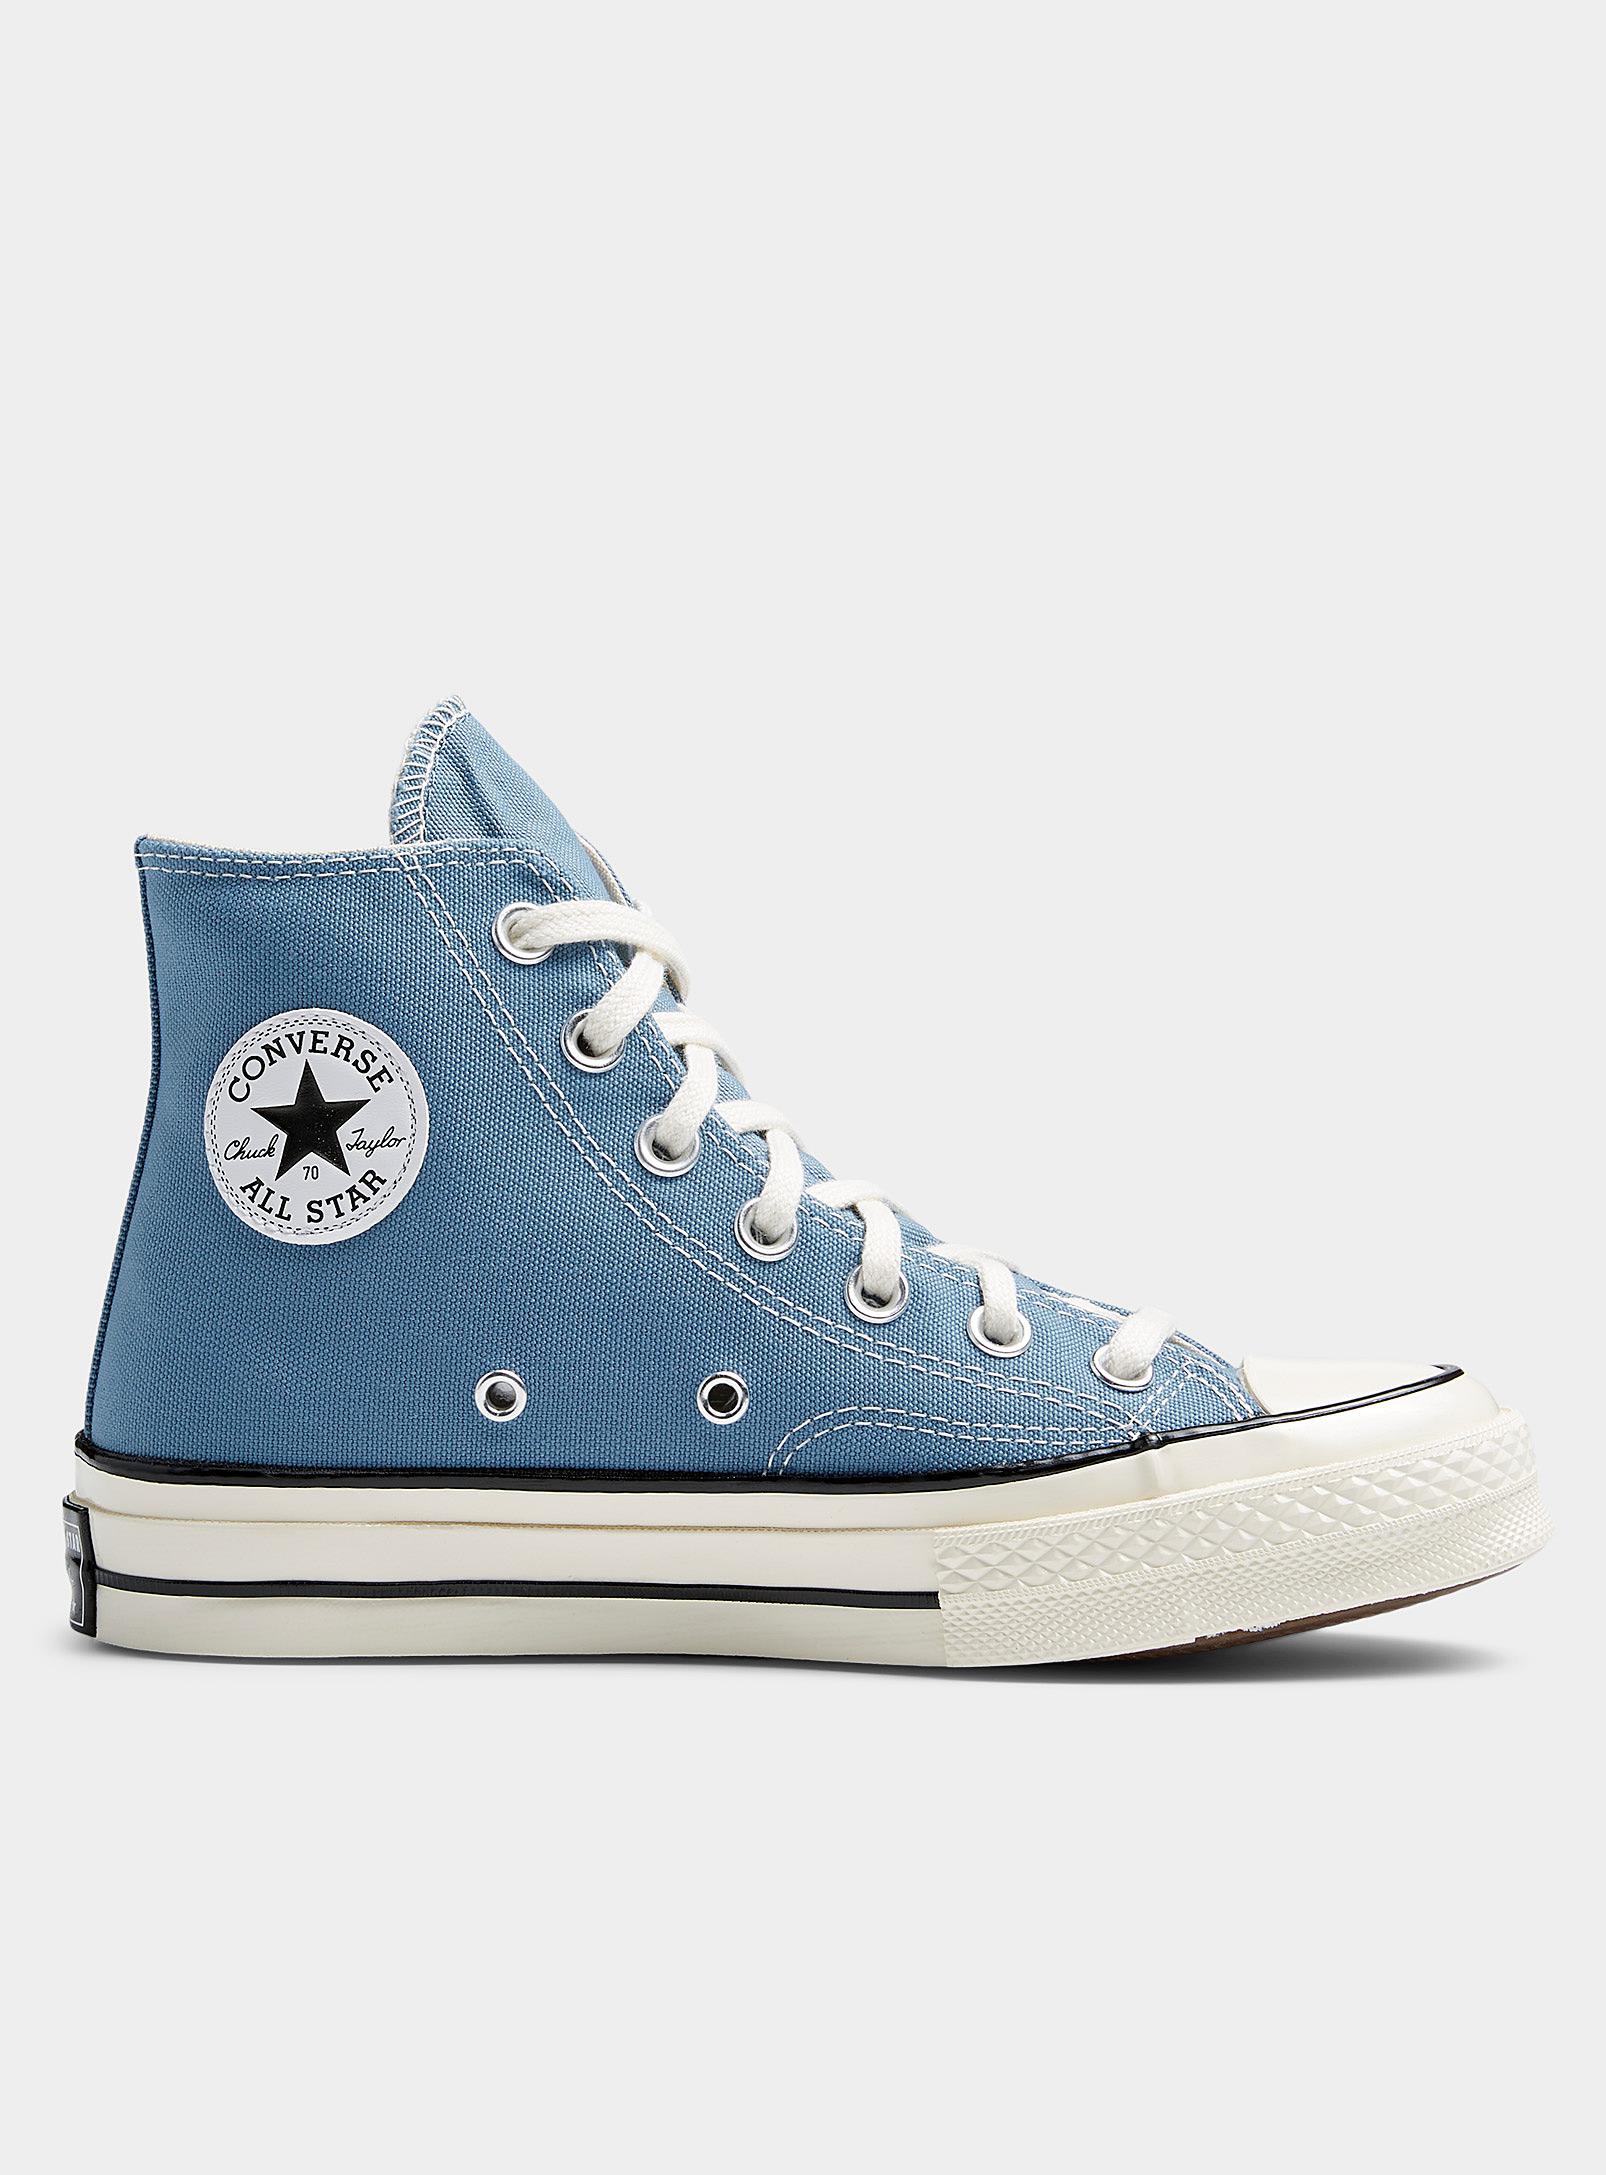 Converse Canvas Indigo Oxide Chuck 70 High Top Sneakers Women in Baby Blue  (Blue) | Lyst